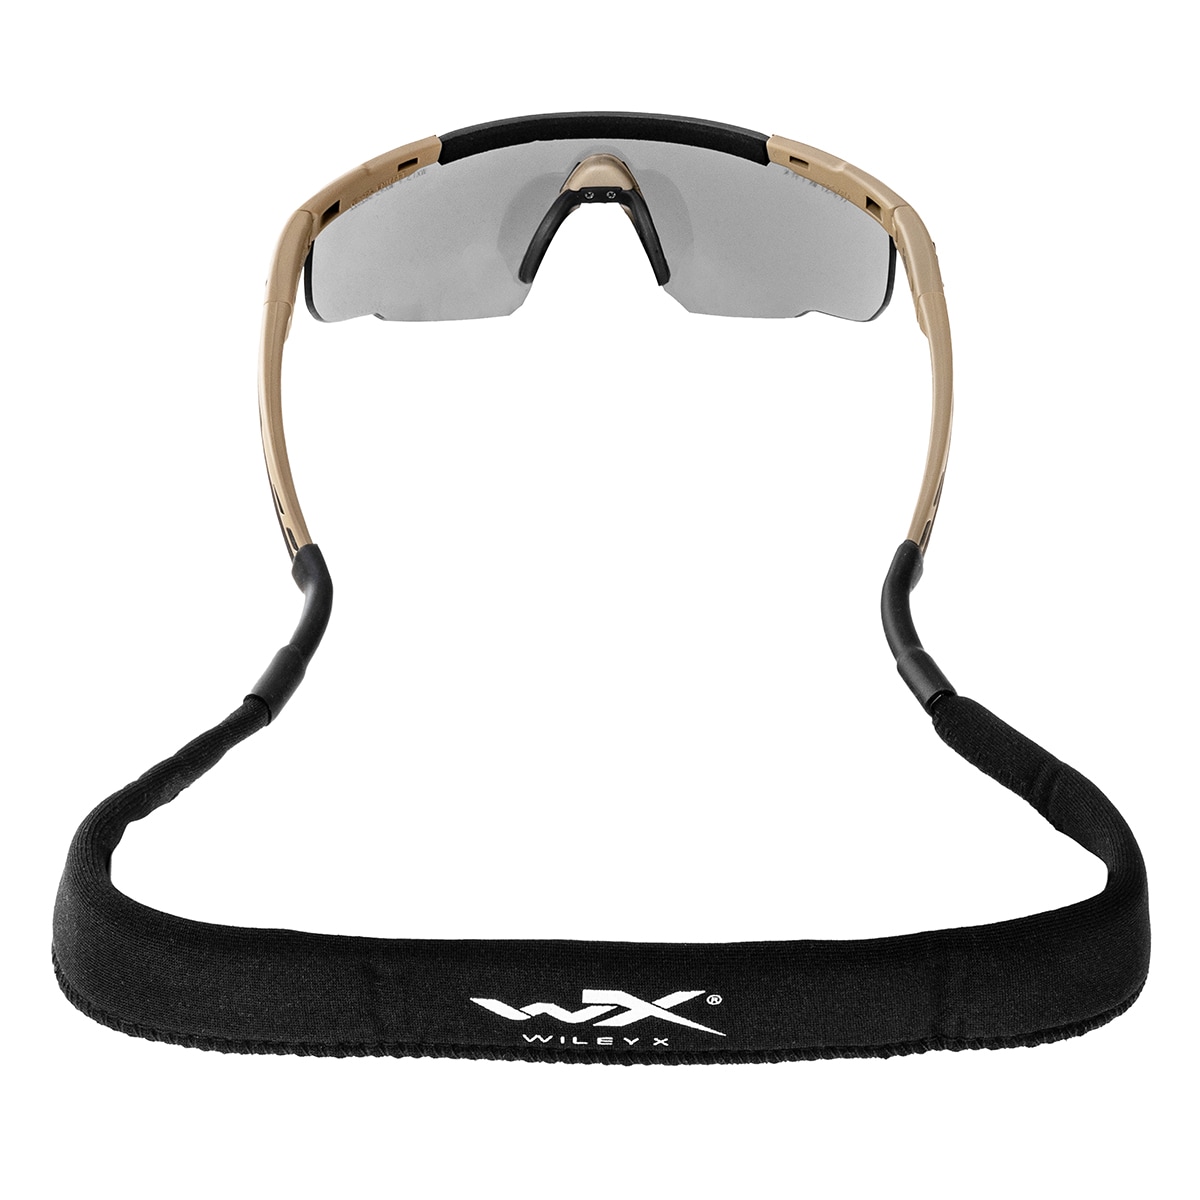 Pasek Wiley X Floating Leash Cord do okularów - Black
